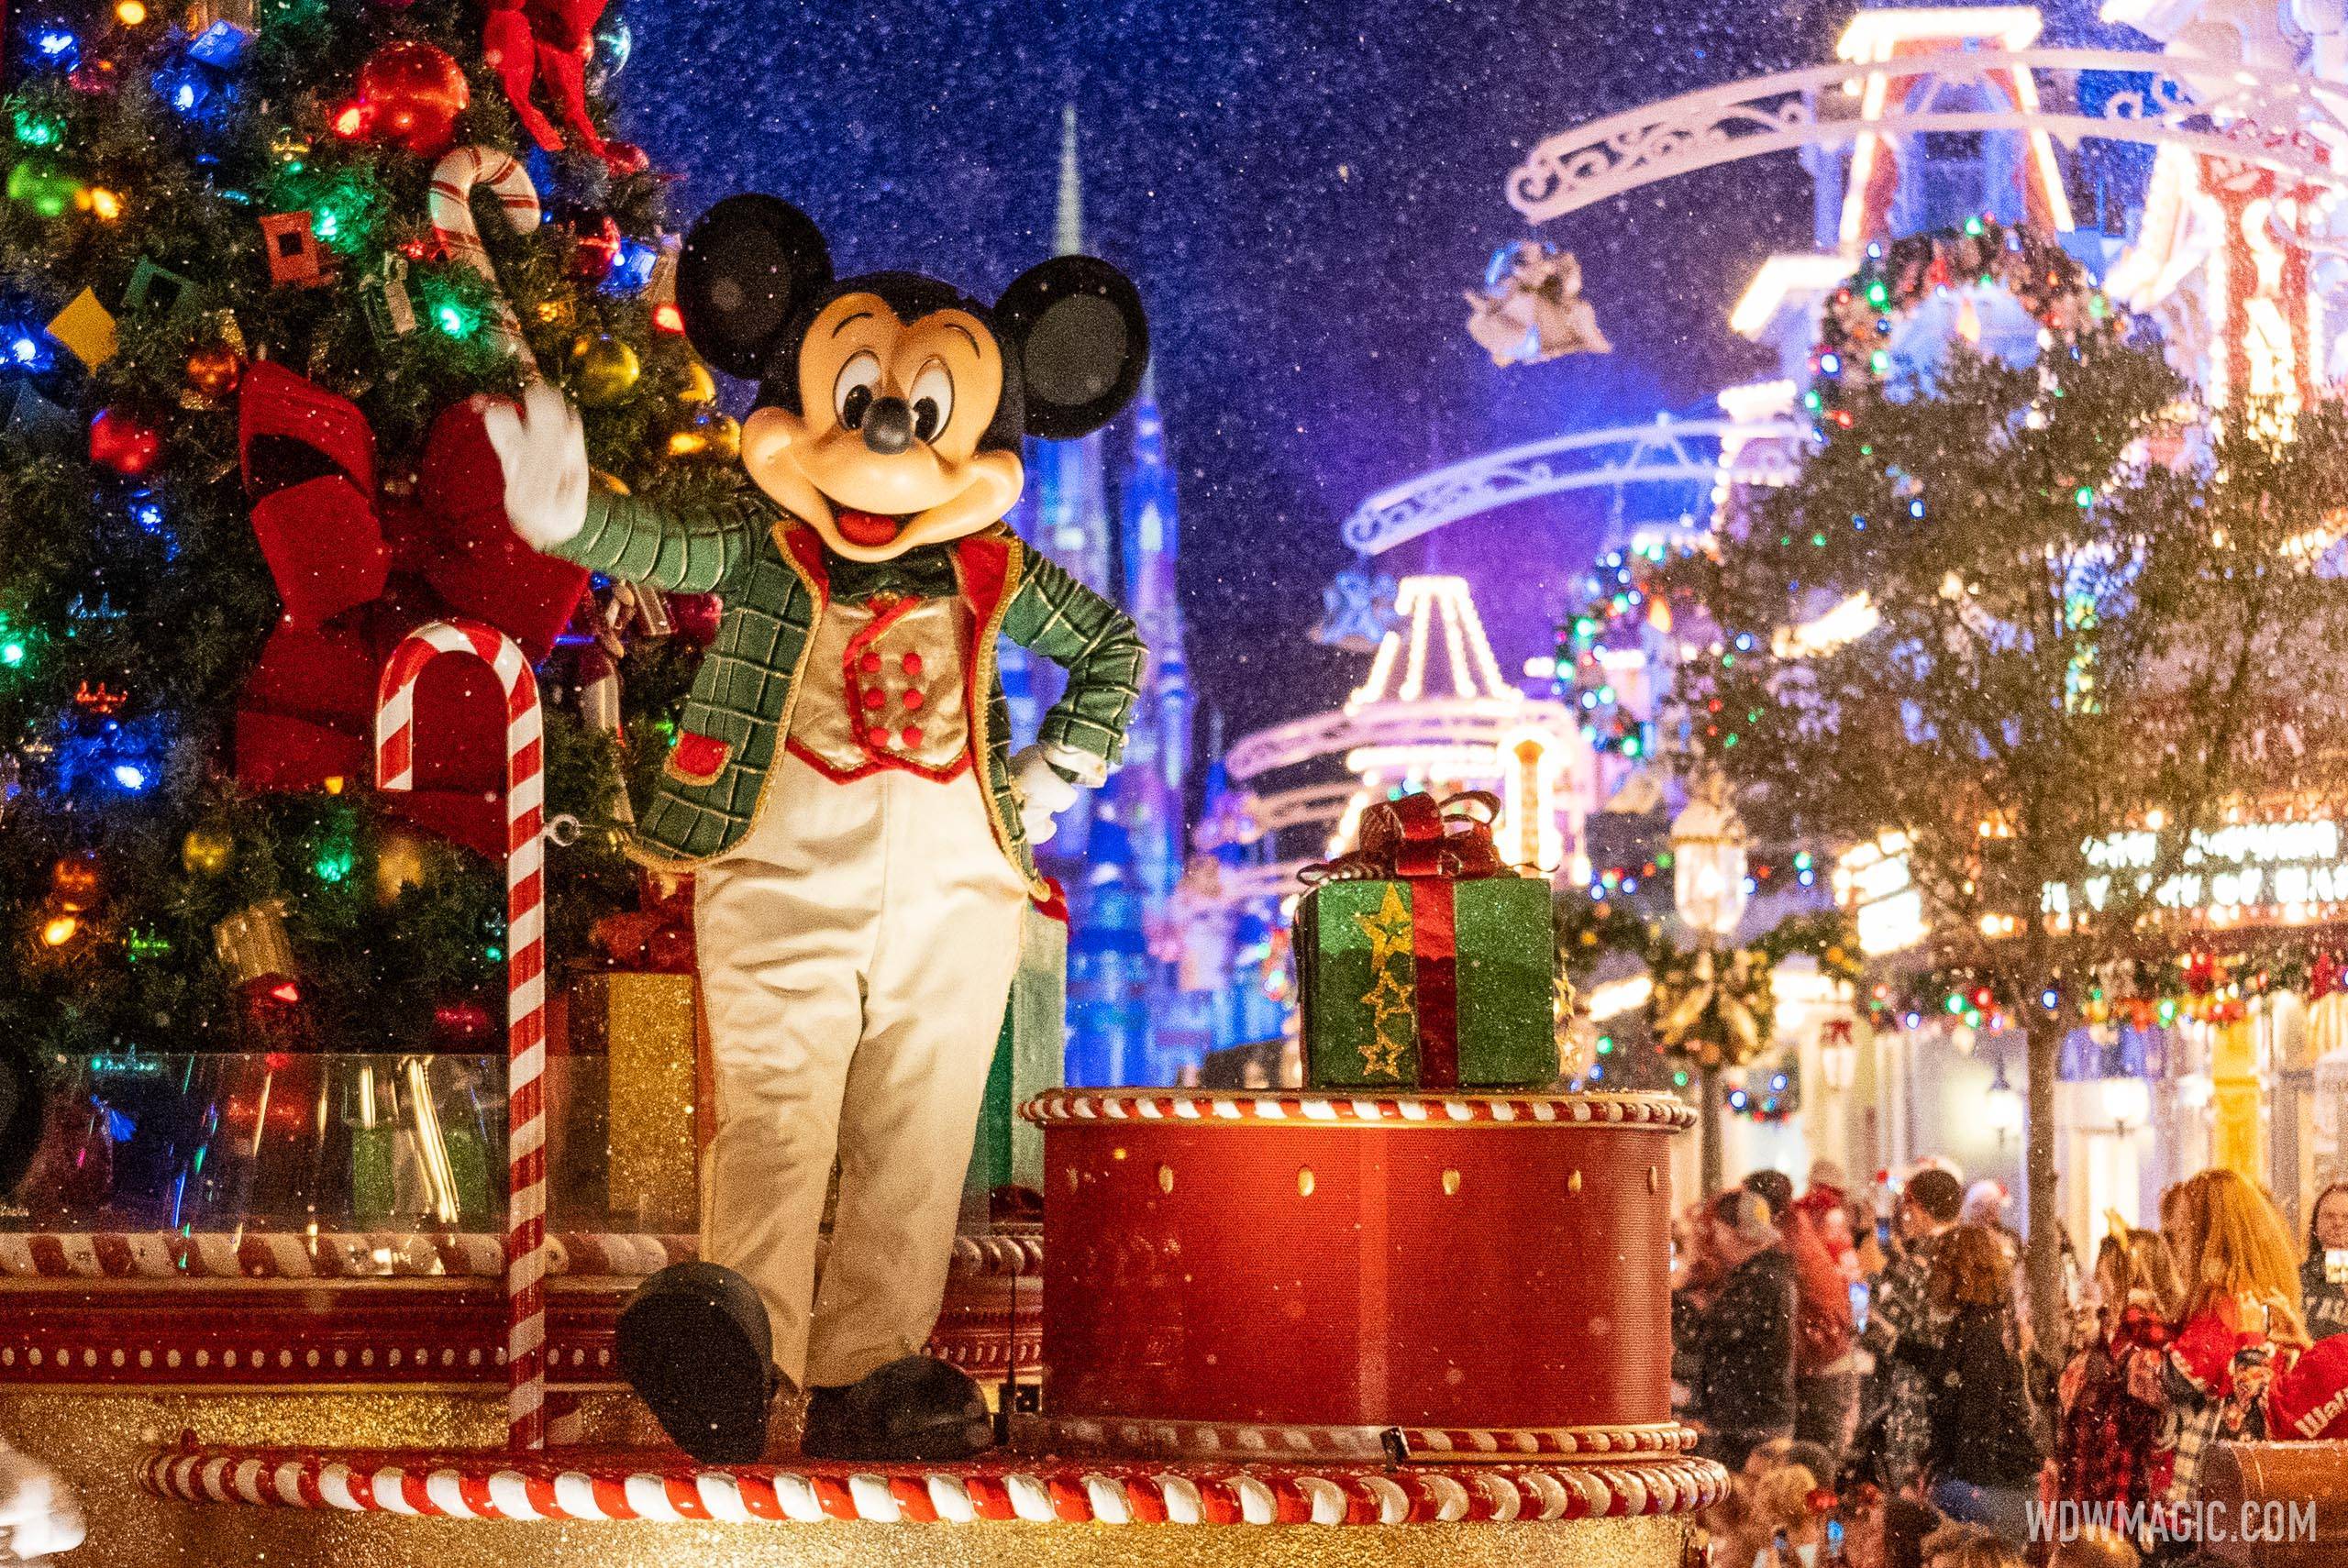 Walt Disney Animation Studios Release 6 Digital Holiday Cards from